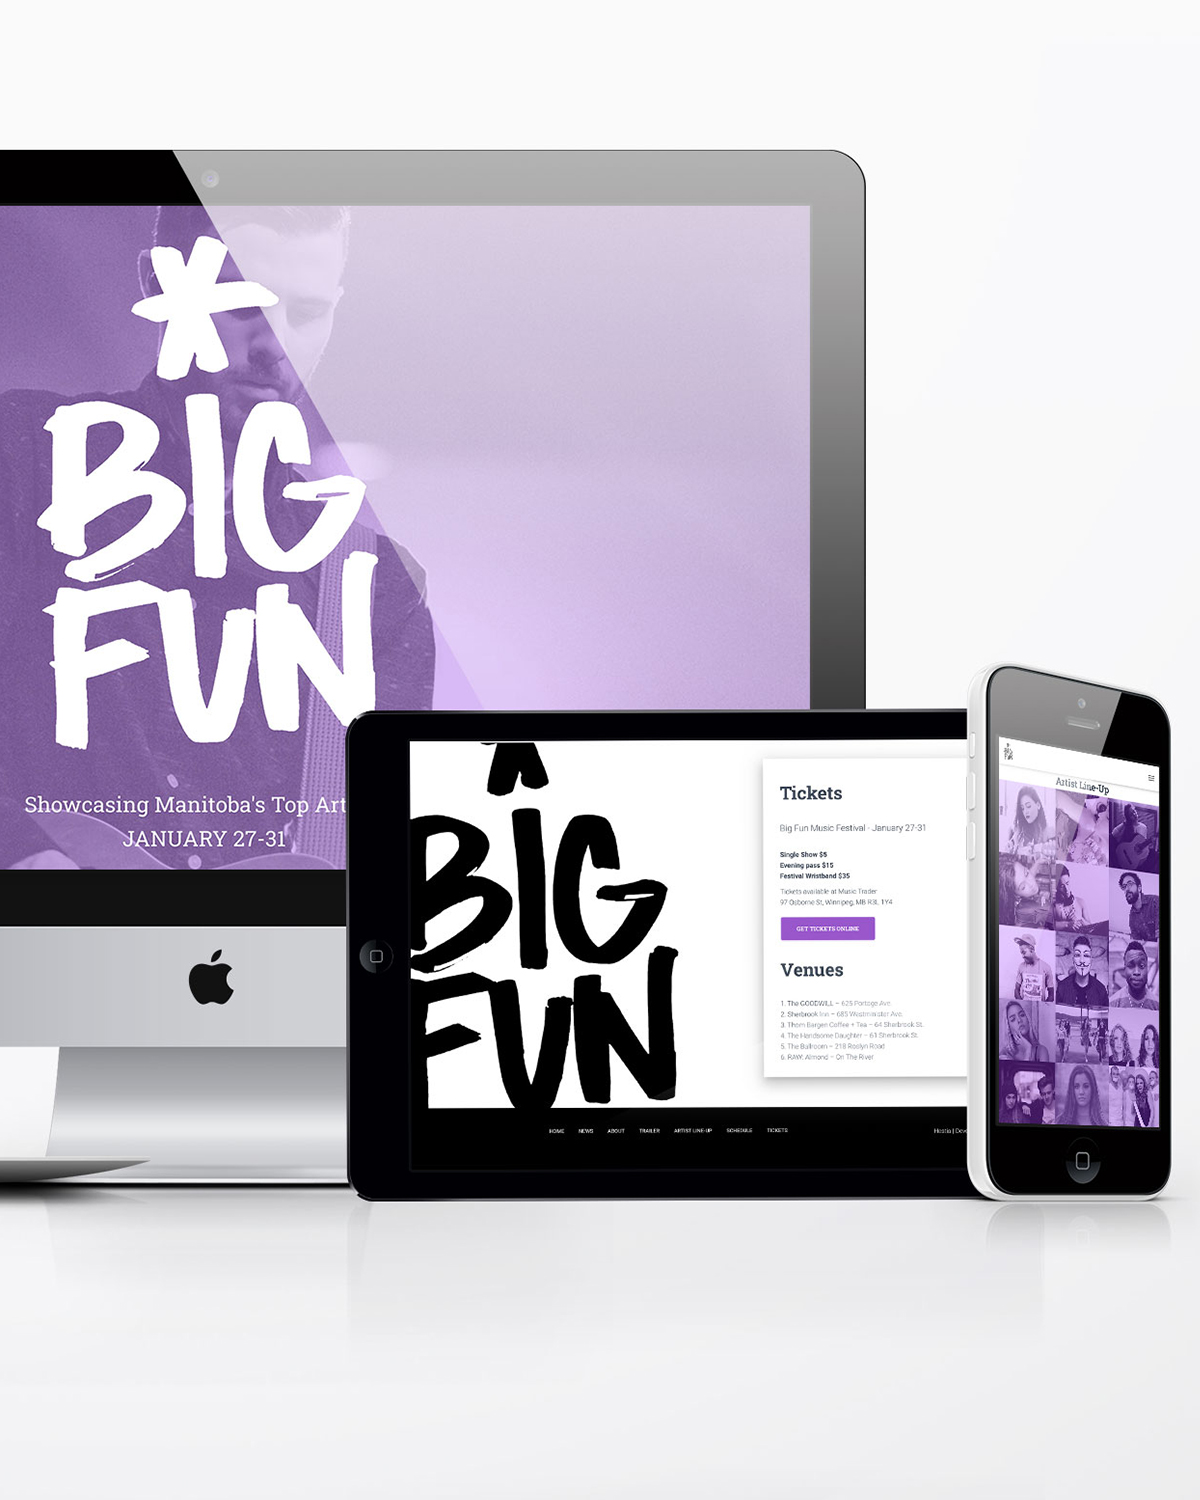 Big Fun Festival UX design by Janet Adamana